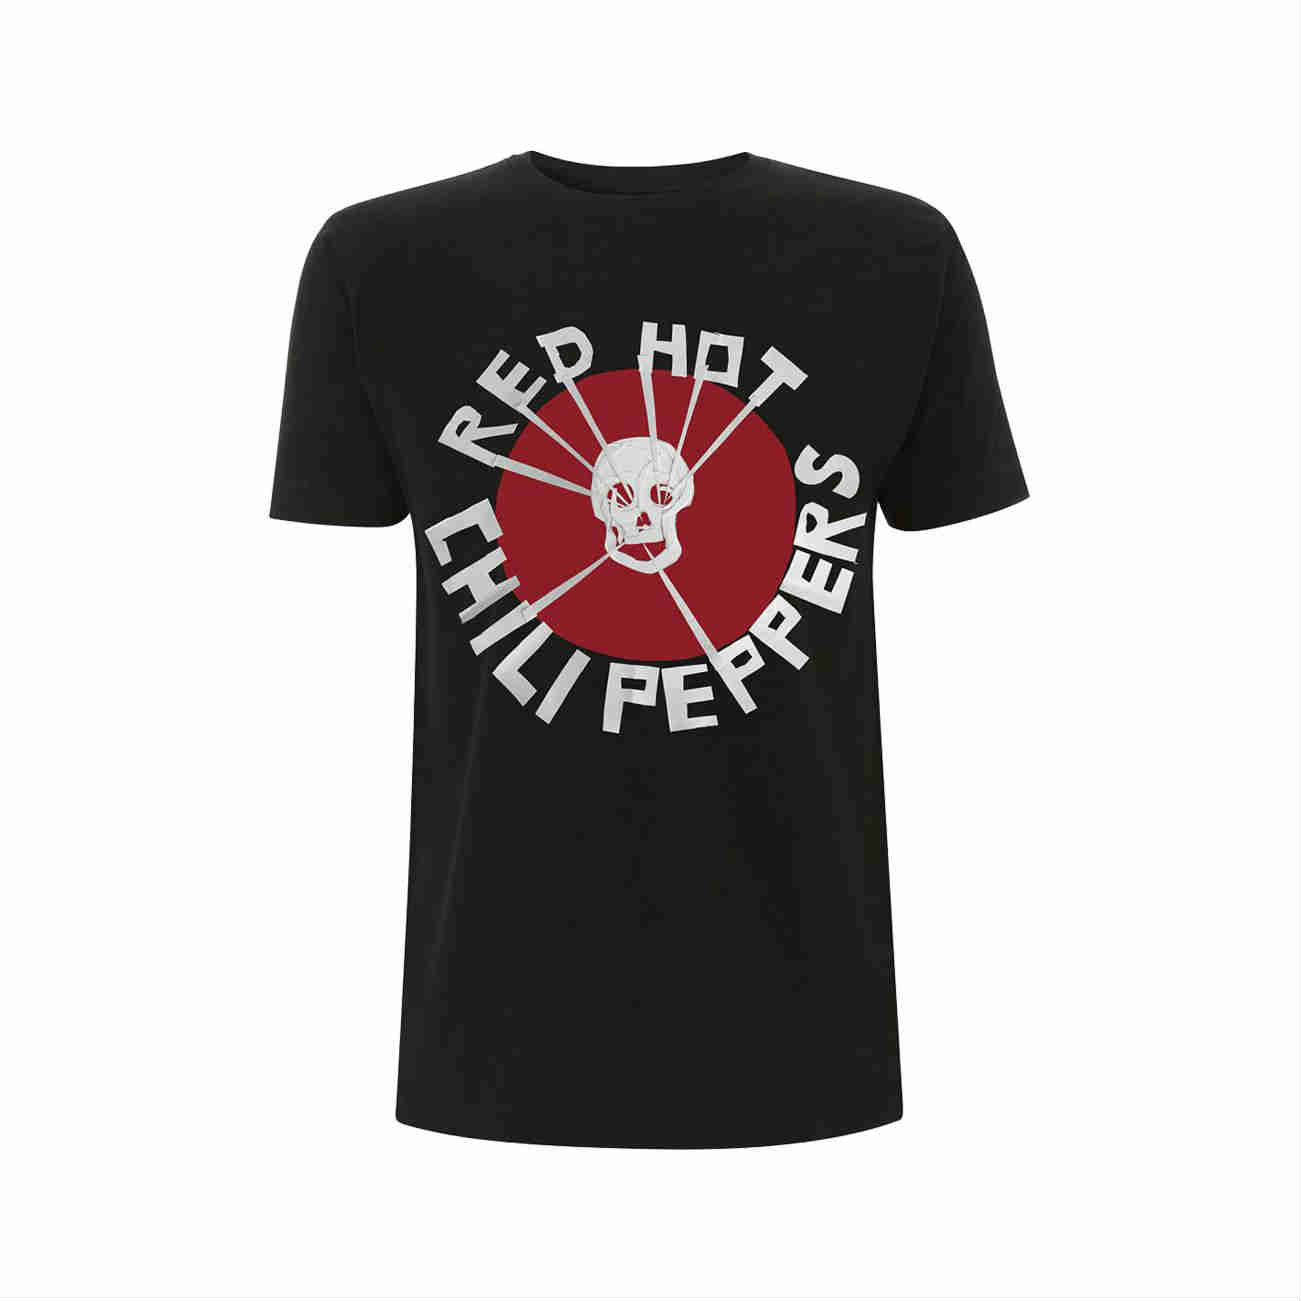 Red Hot Chili Peppers バンドTシャツ レッド・ホット・チリ・ペッパーズ Flea Skull - バンドTシャツの通販